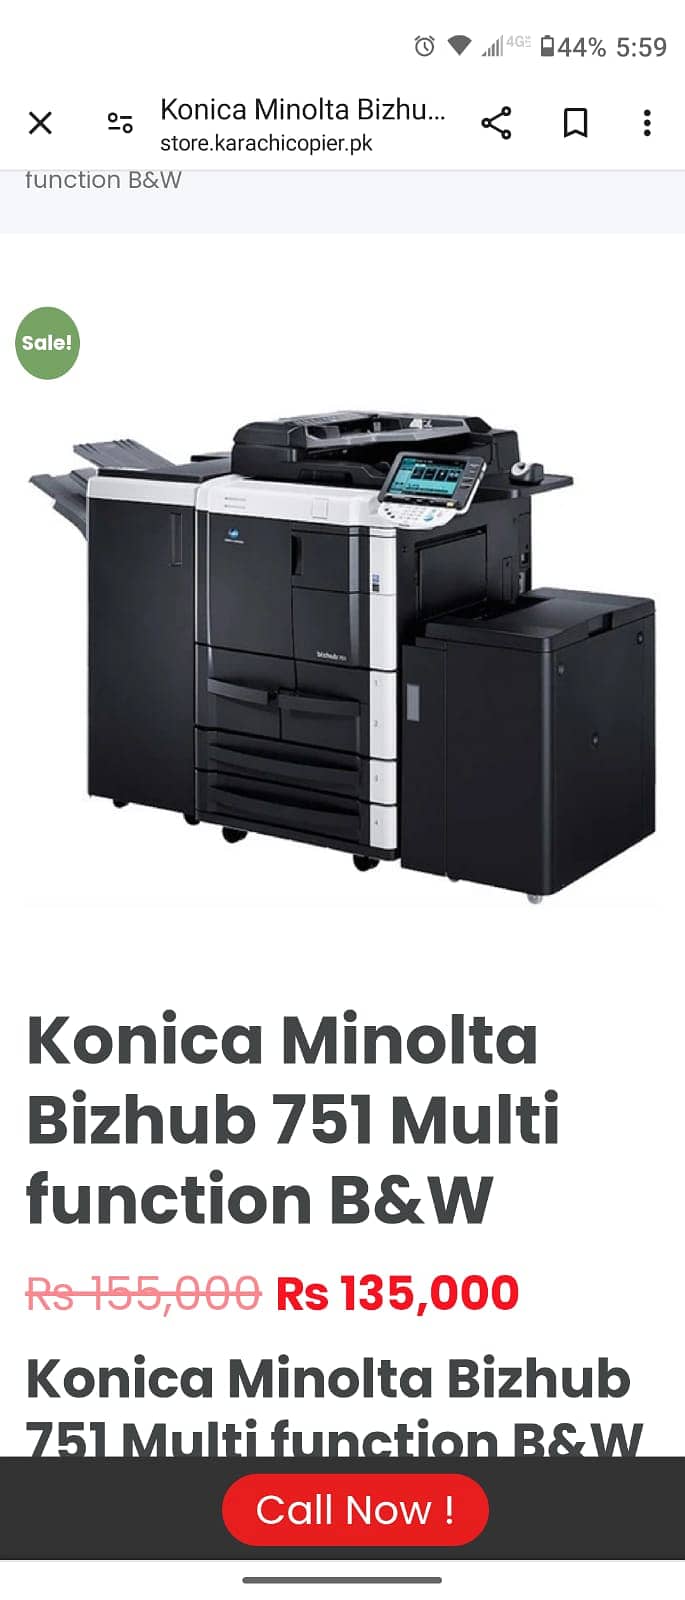 Ricoh, Xerox, Konica Minolta, Kyocera Mita. HP 1